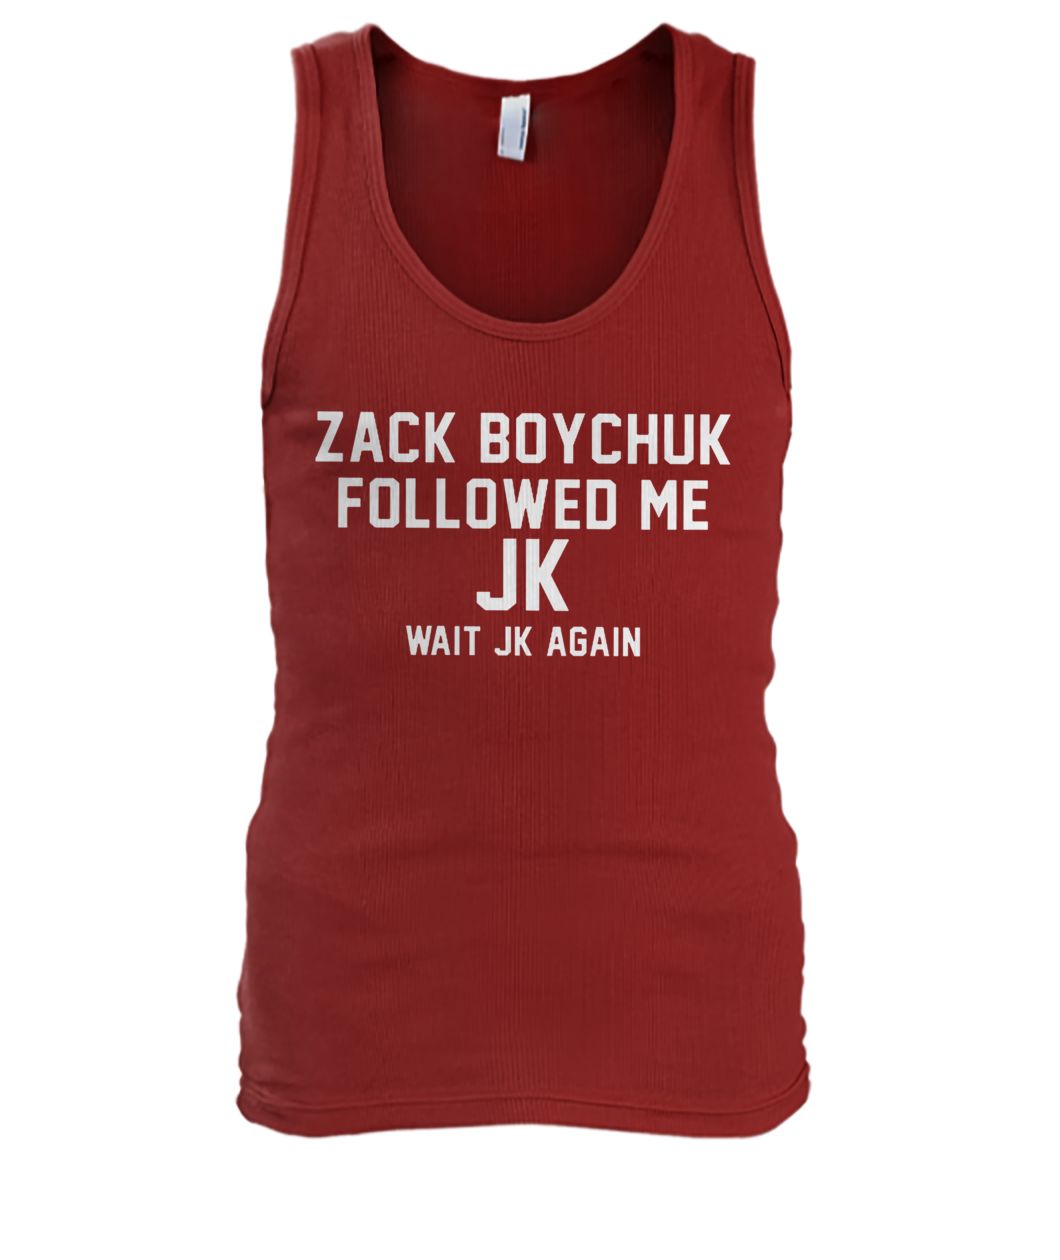 Zack boychuk followed me Jk wait Jk again men's tank top